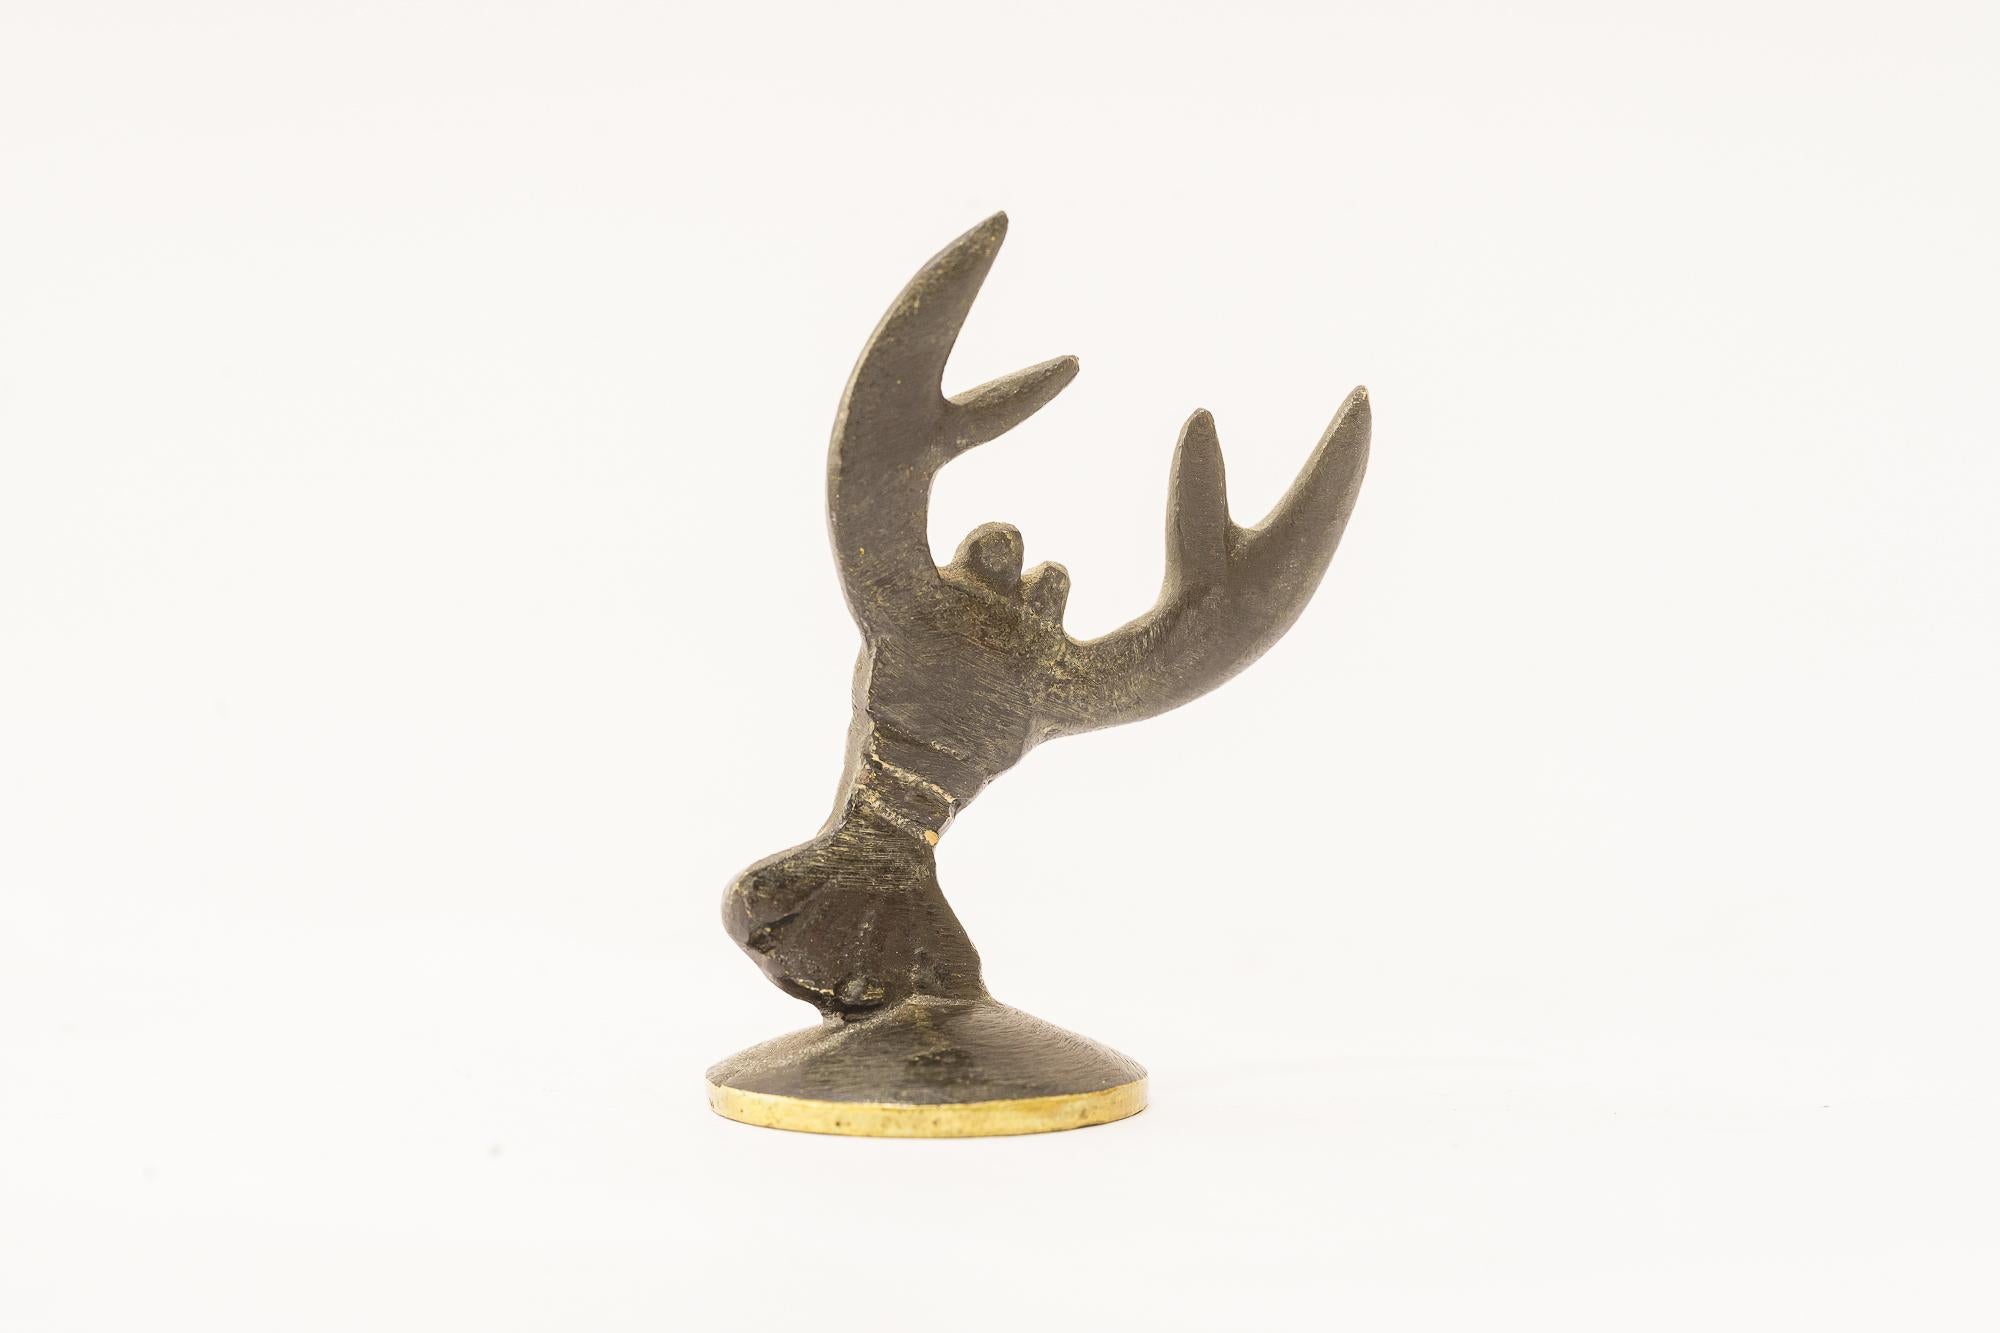 Walter Bosse Cancer Zodiac Sign Brass Figurine, 1950s
Original condition